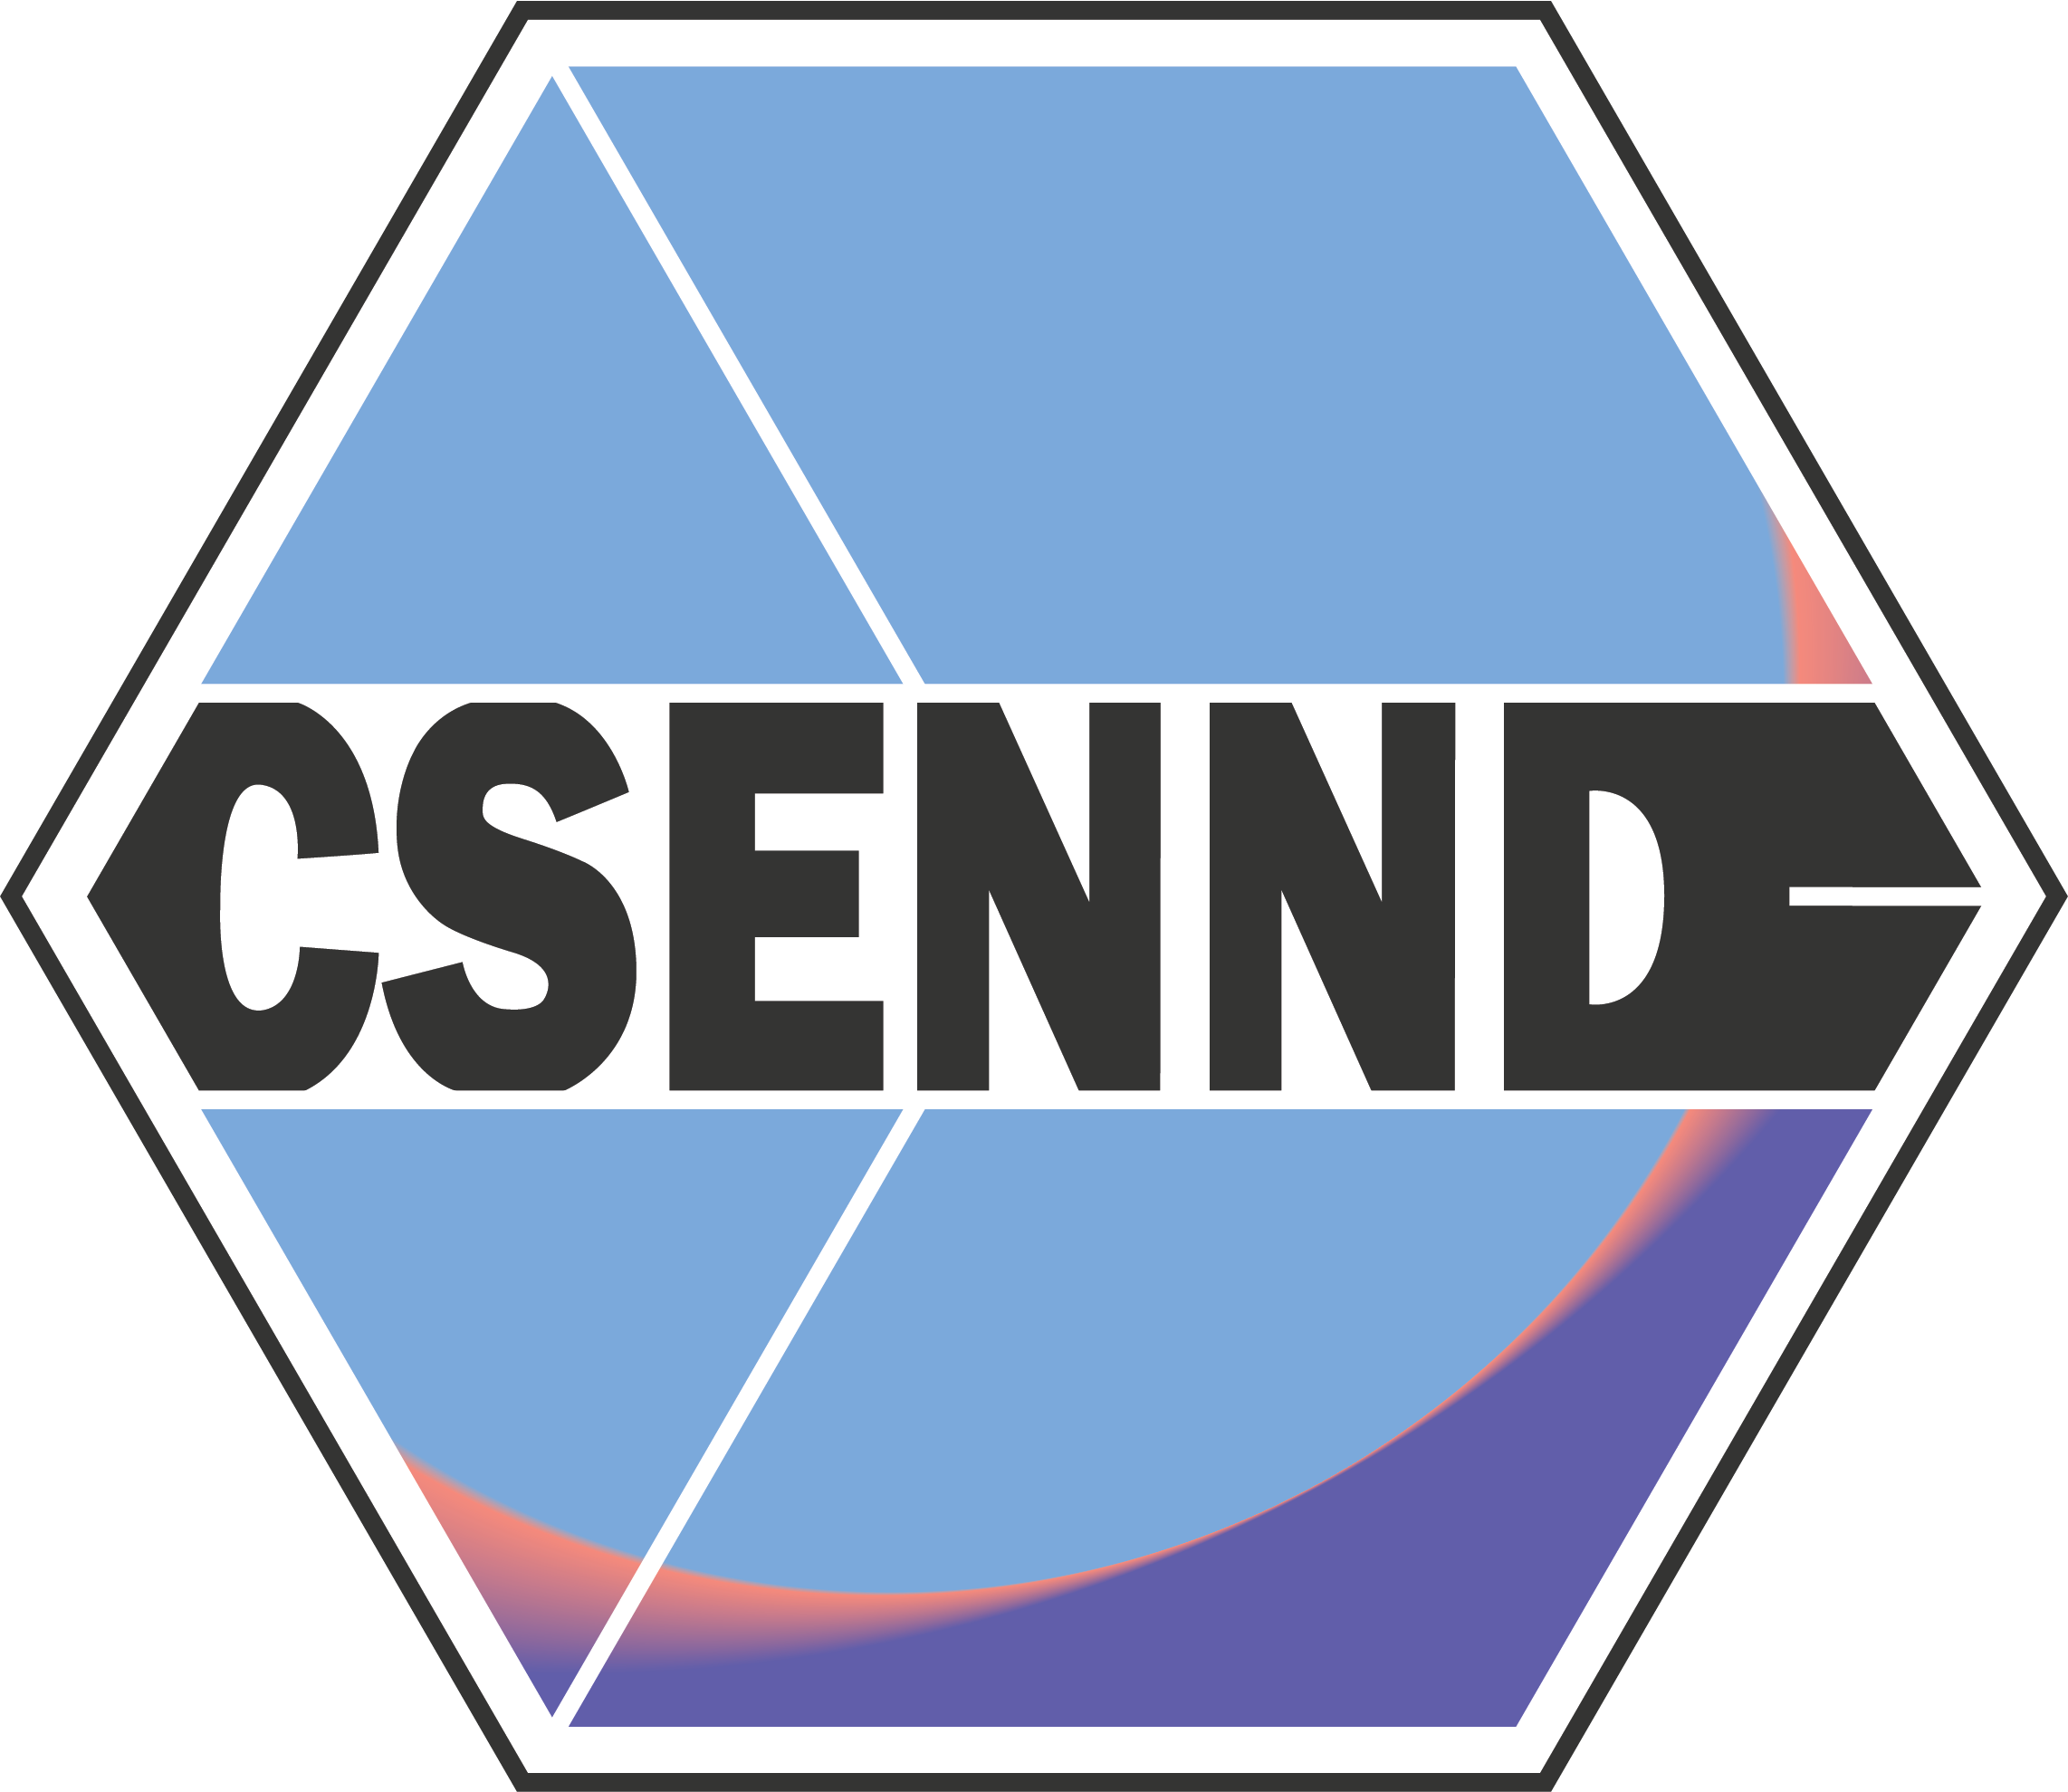 NSF CCI Center for Single-Entity Nanochemistry and Nanocrystal Design